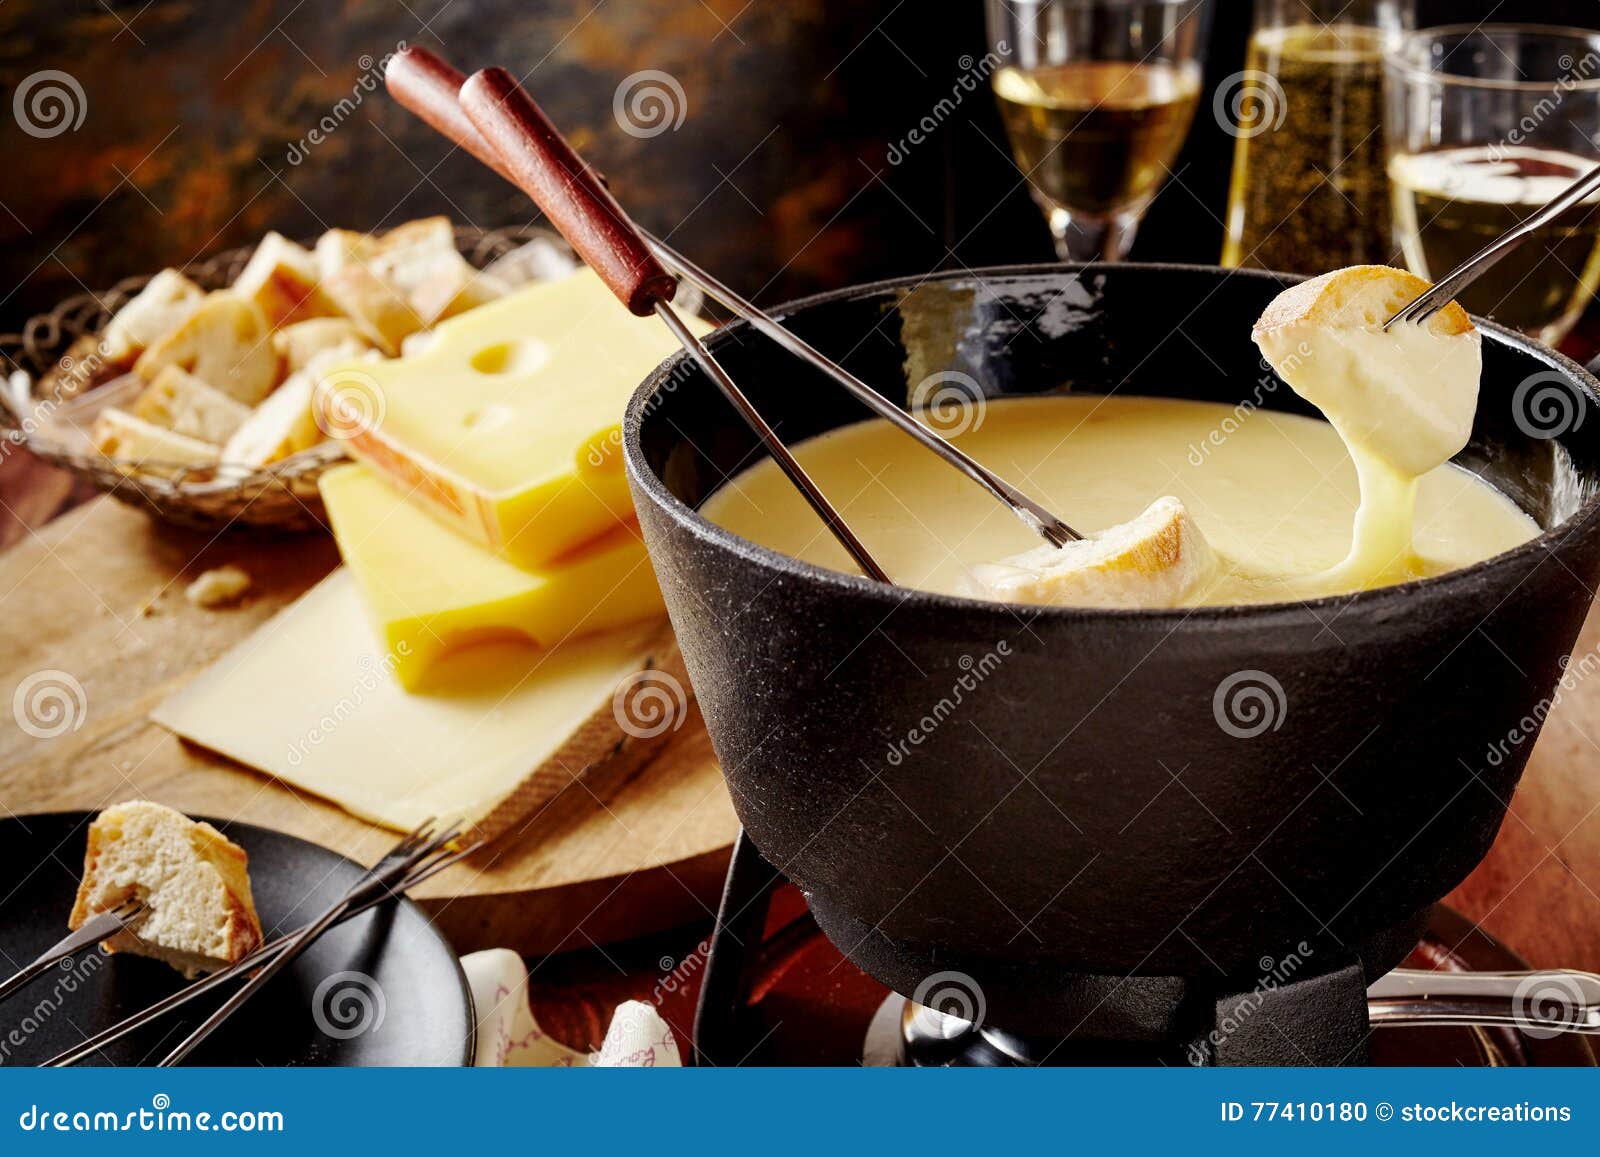 swiss cheese fondue, a popular national dish